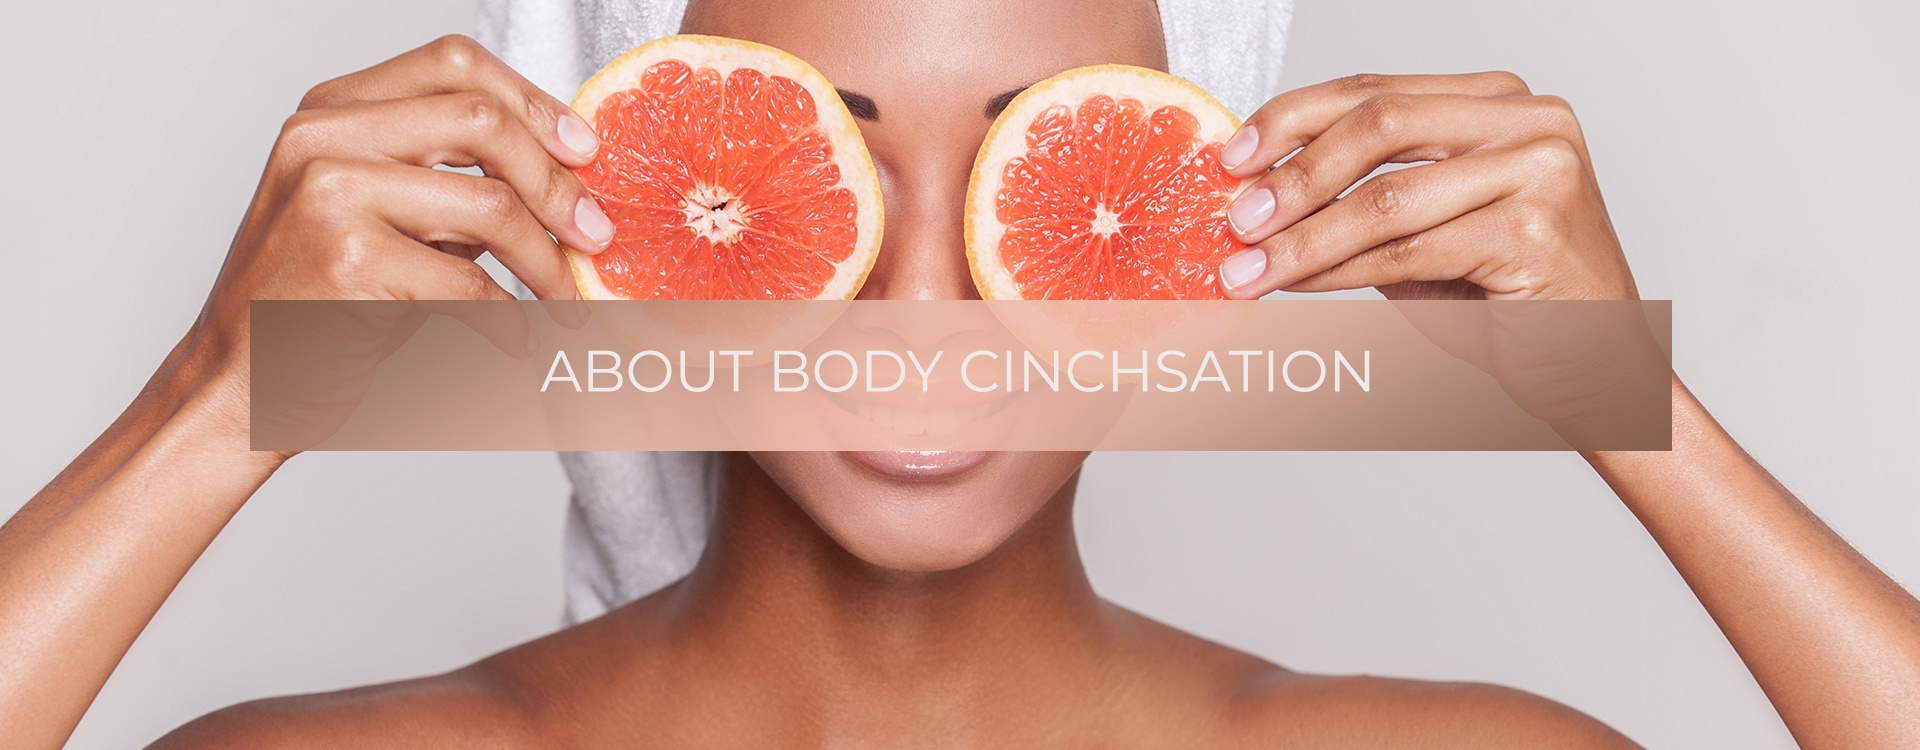 Body CINCHsation - About Body Cinchsation